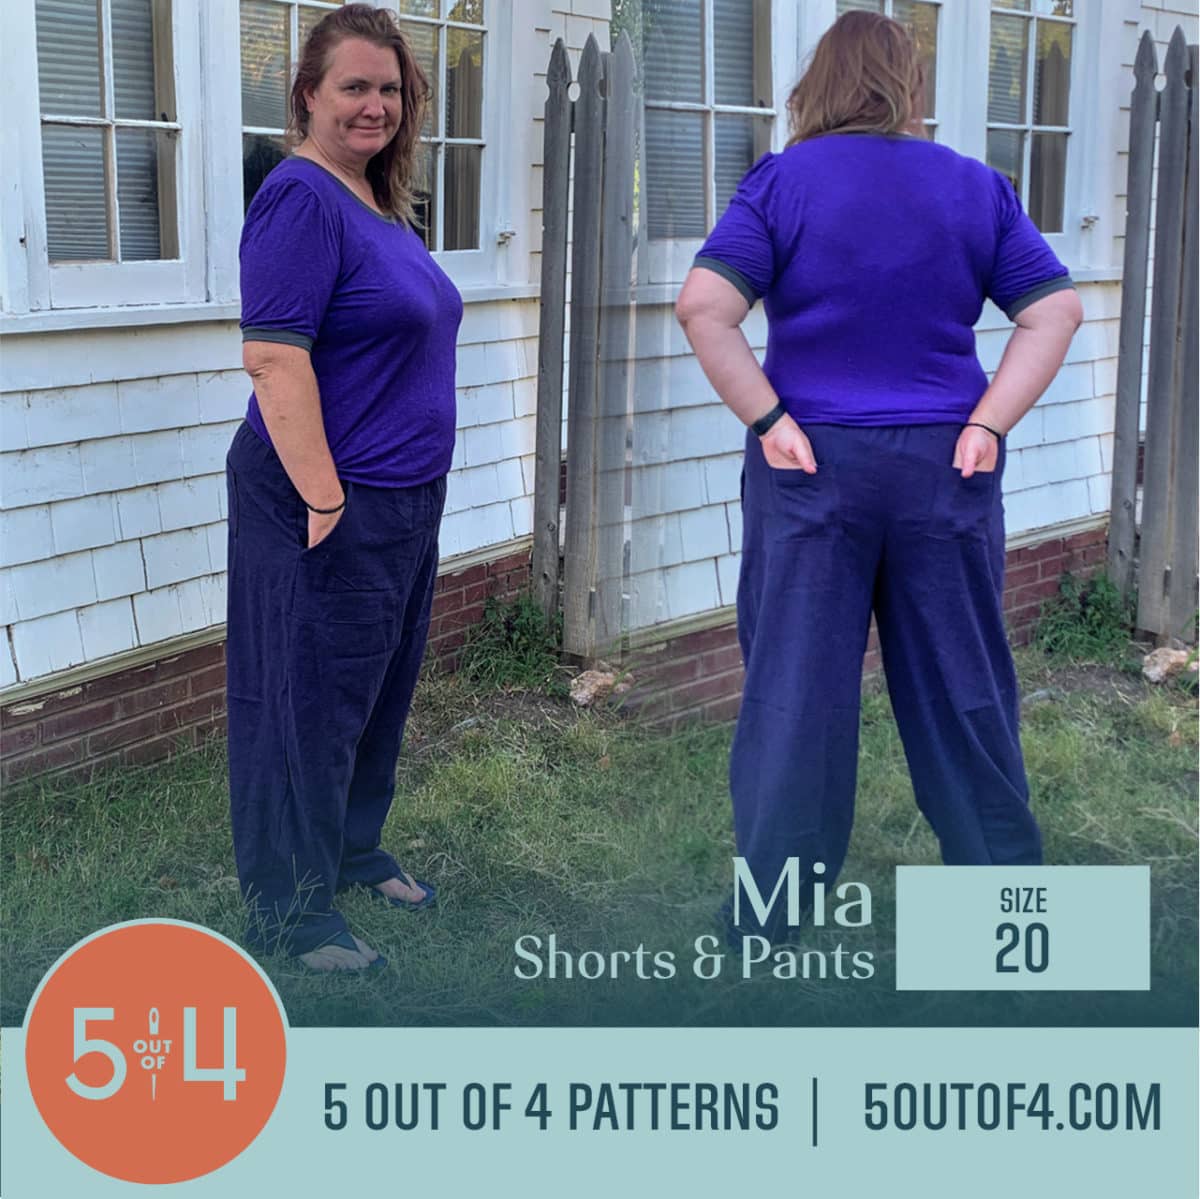 5oo4 Patterns Mia Pants size 20